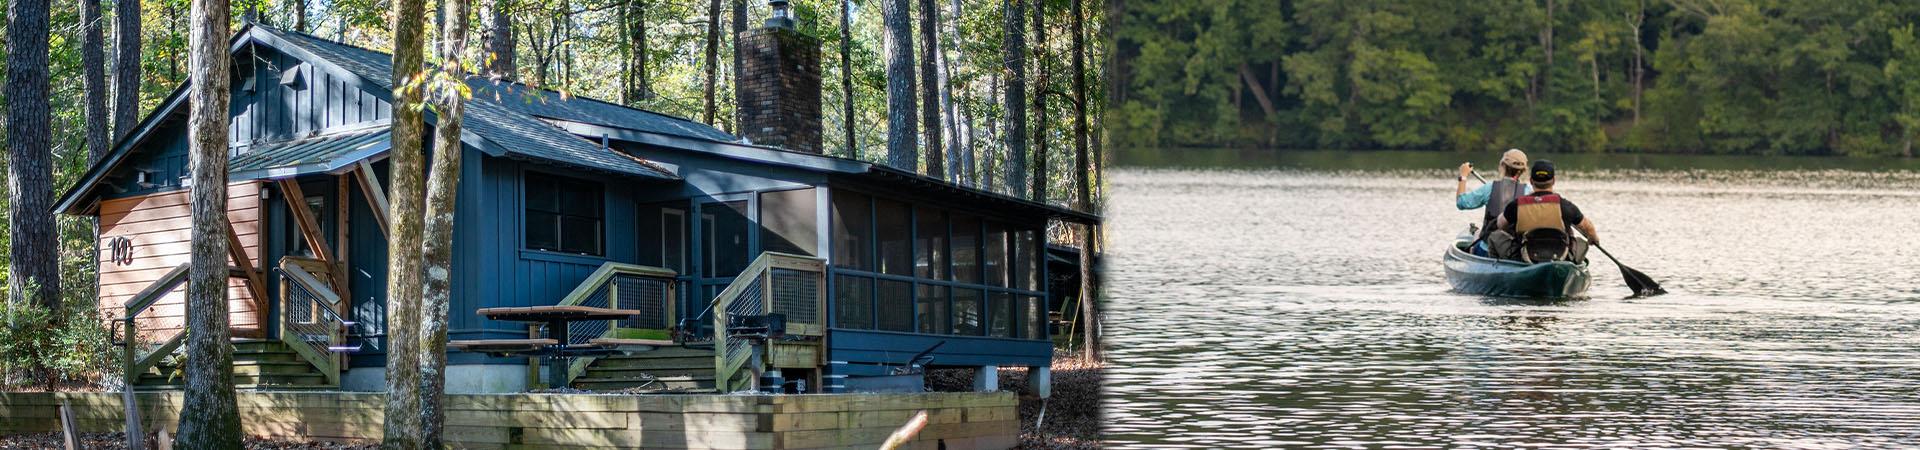 Hard Labor Creek cabin and outdoor activities